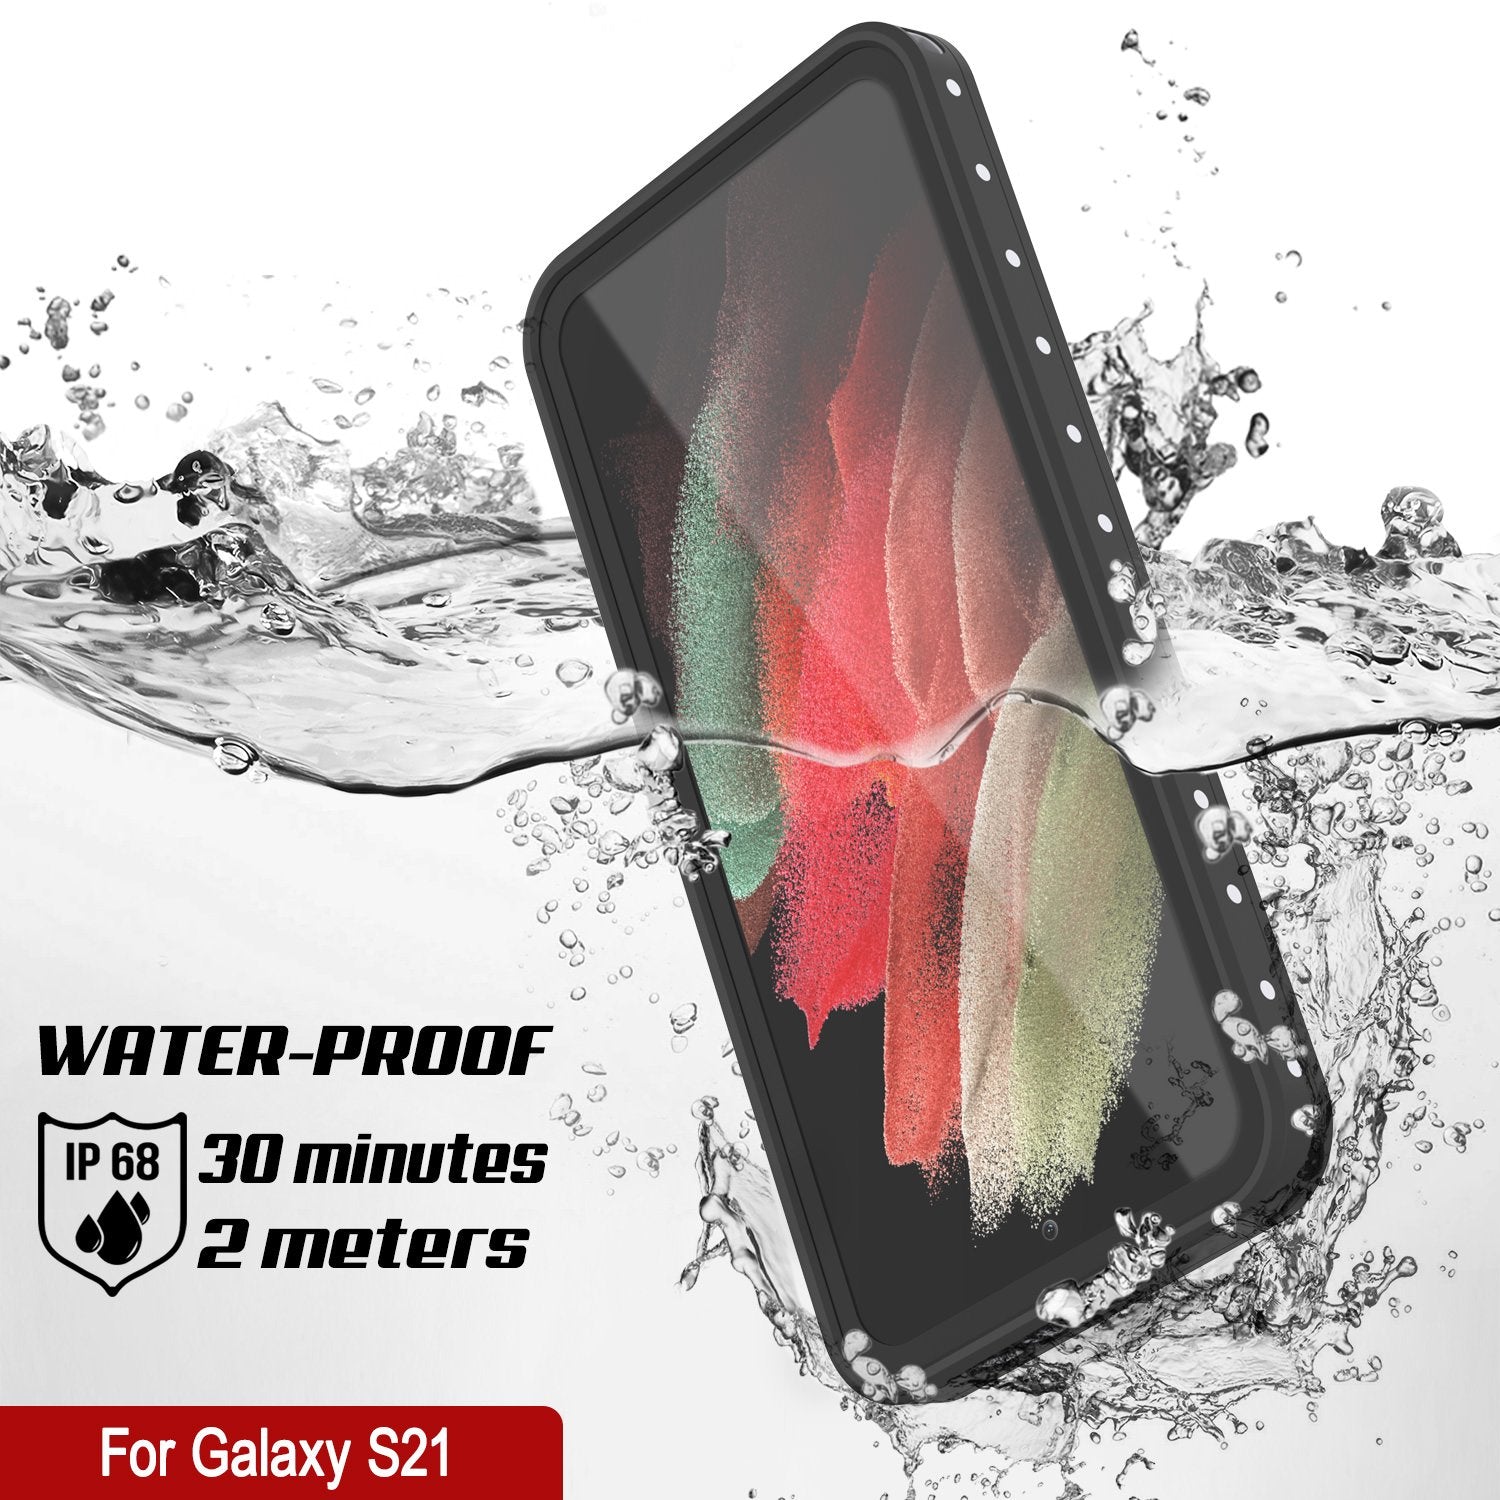 Galaxy S21 Waterproof Case, Punkcase StudStar White Thin 6.6ft Underwater IP68 Shock/Snow Proof